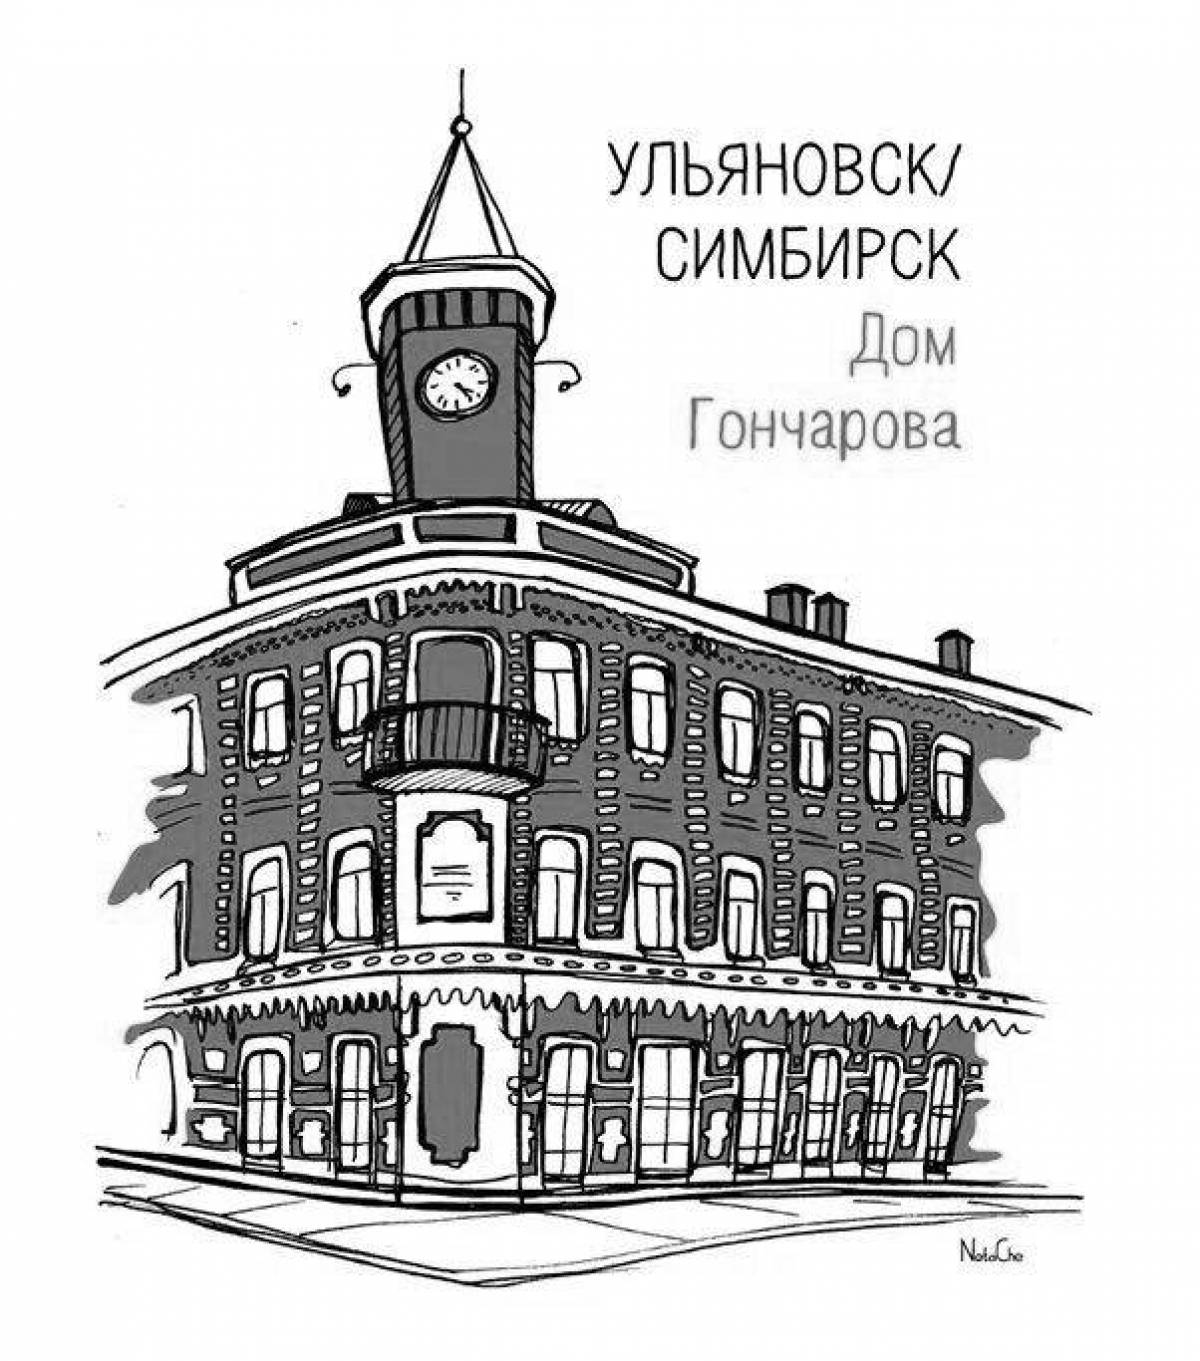 Coloring page charming ulyanovsk